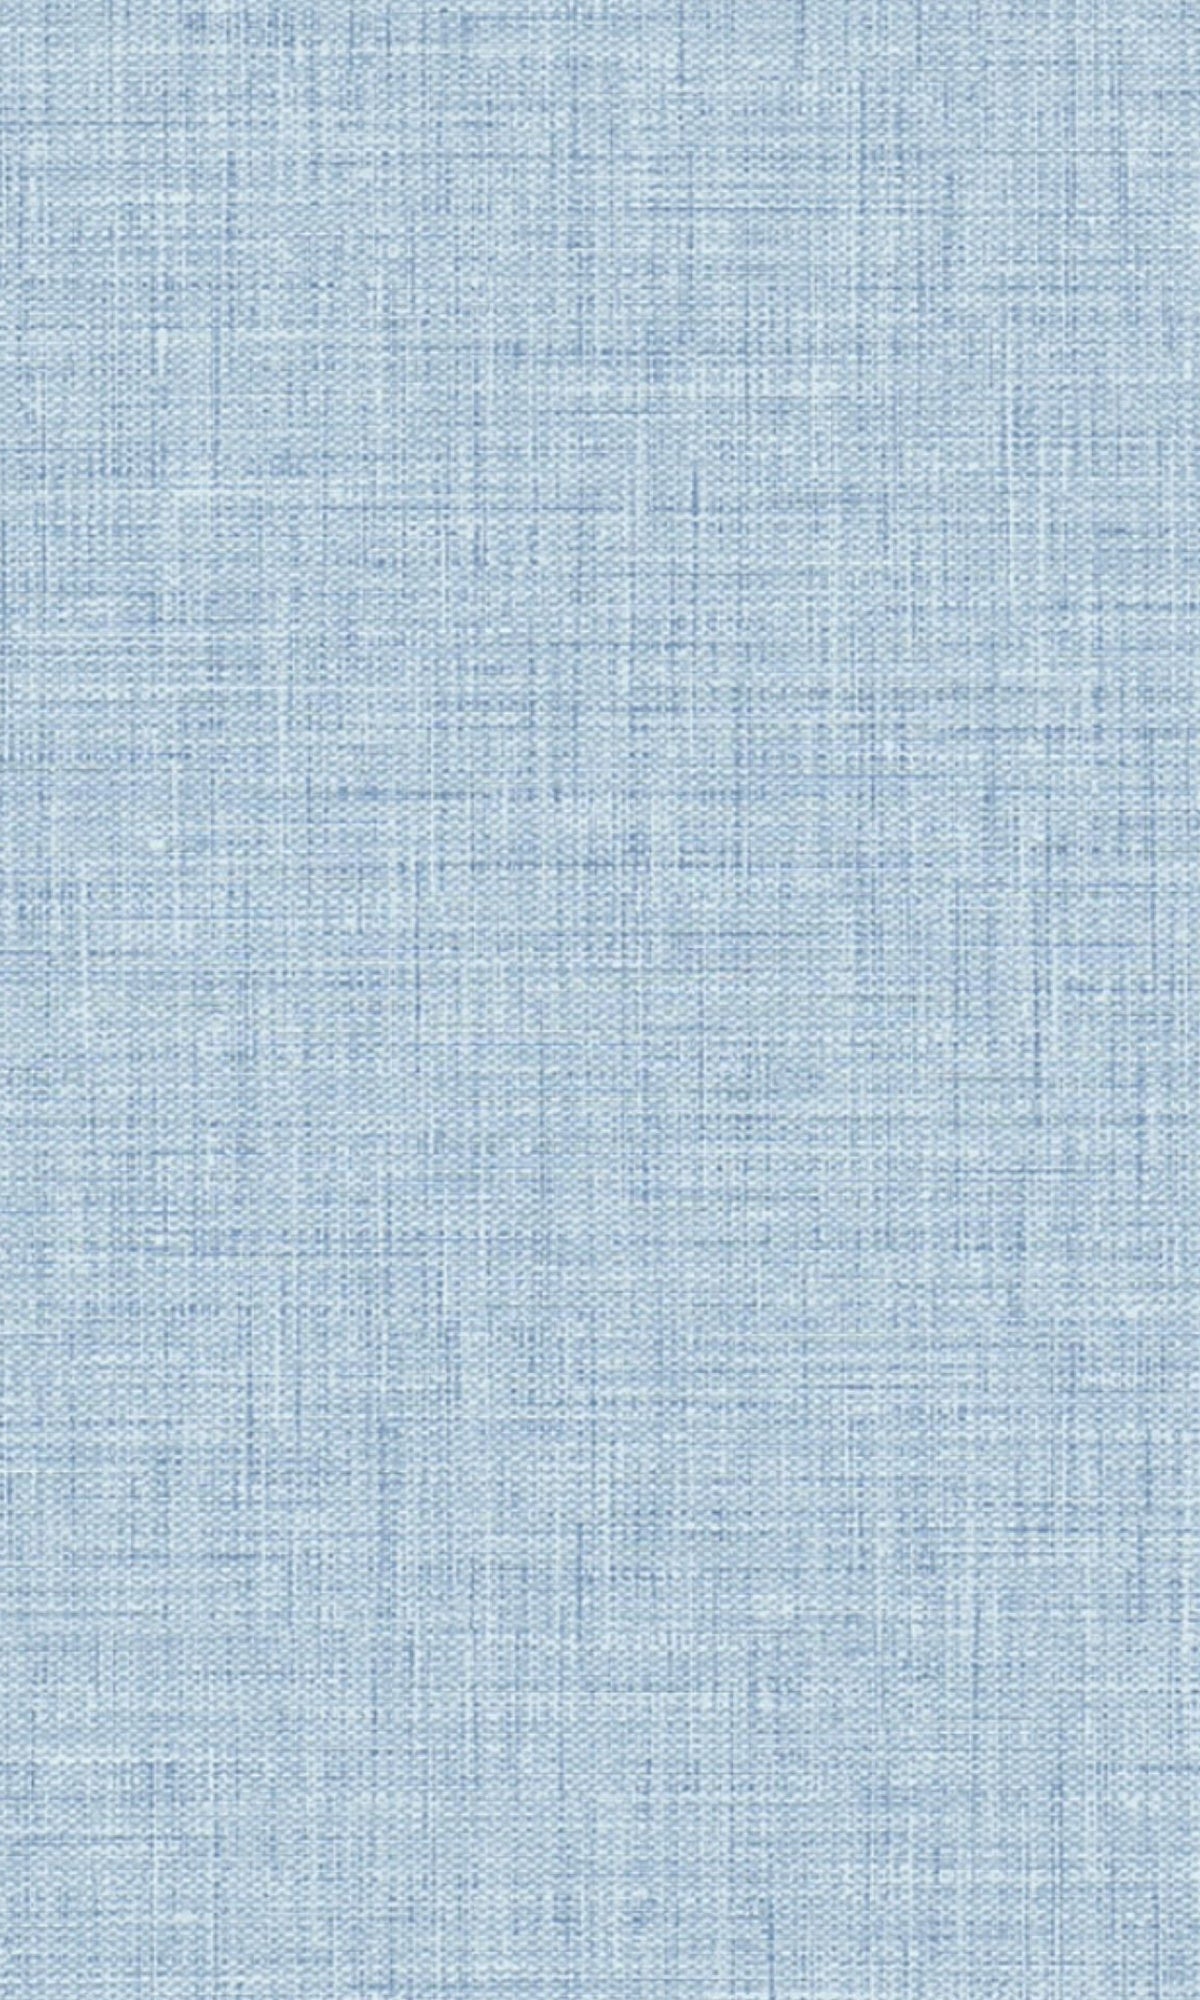 Crisp Blue Fabric Like Textured Vinyl Commercial Wallpaper C7603